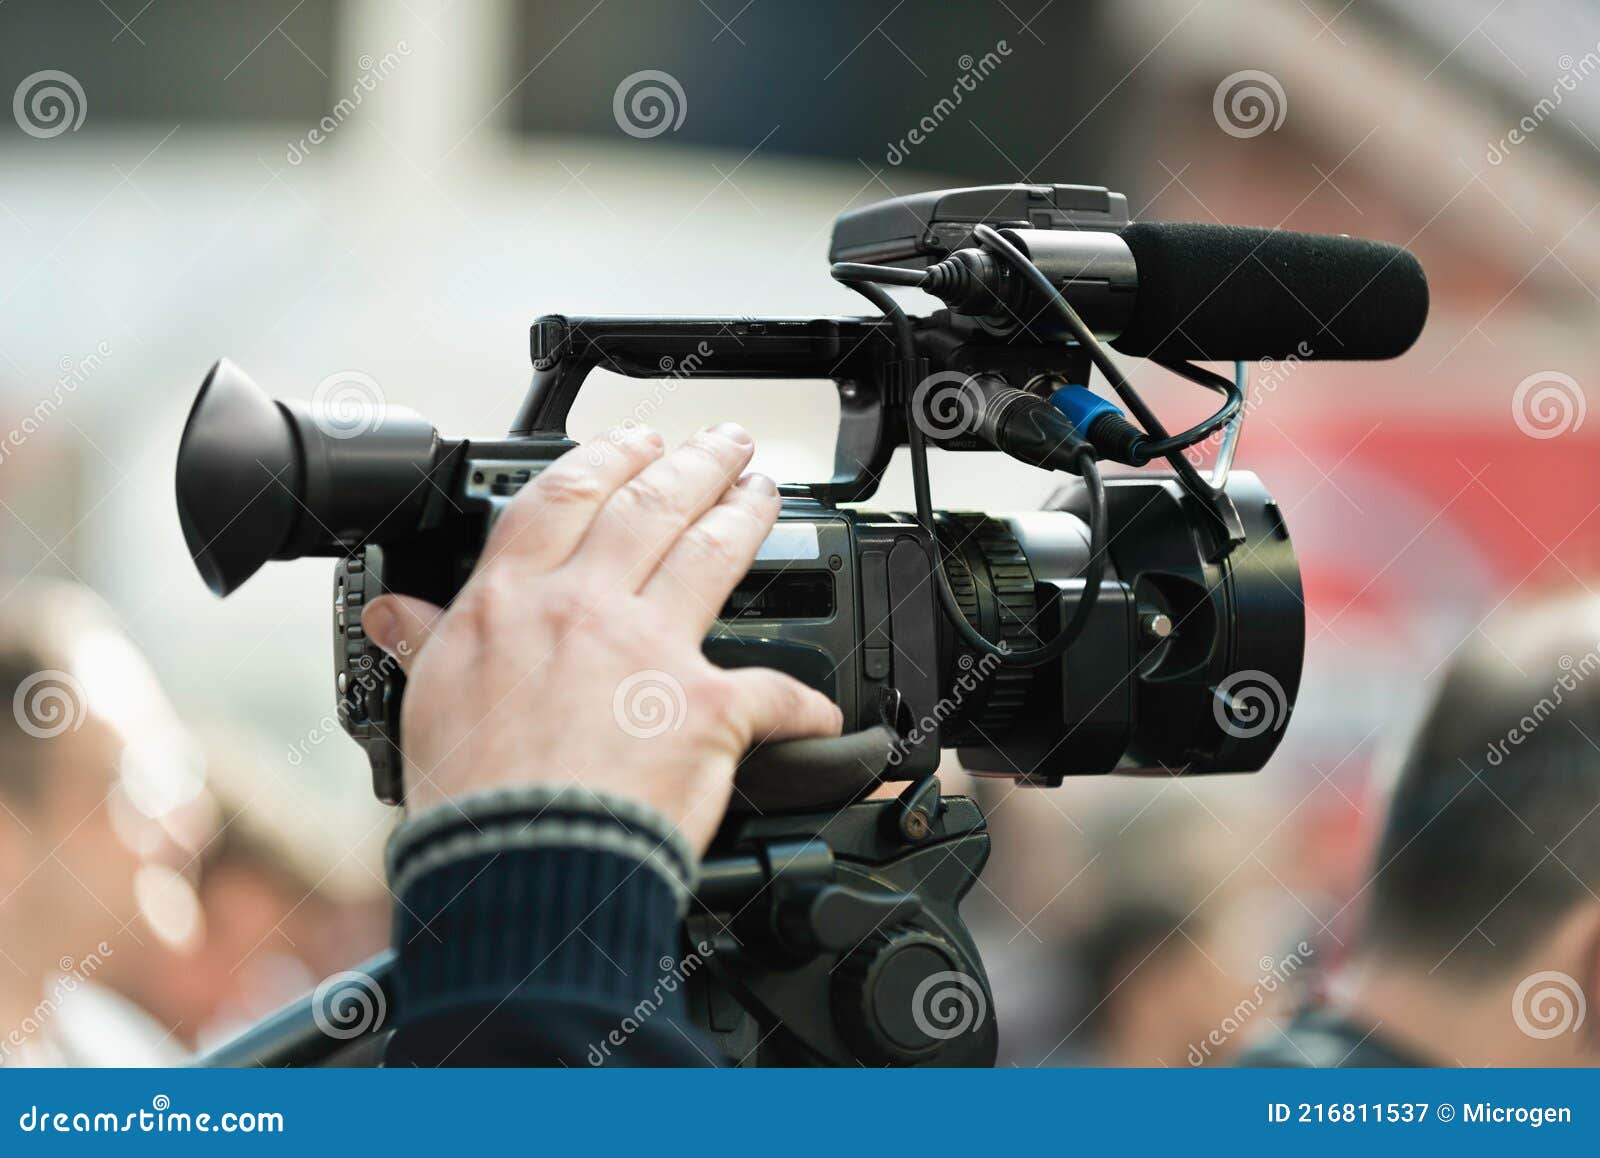 Cameraman recording stock image. Image of interview - 216811537